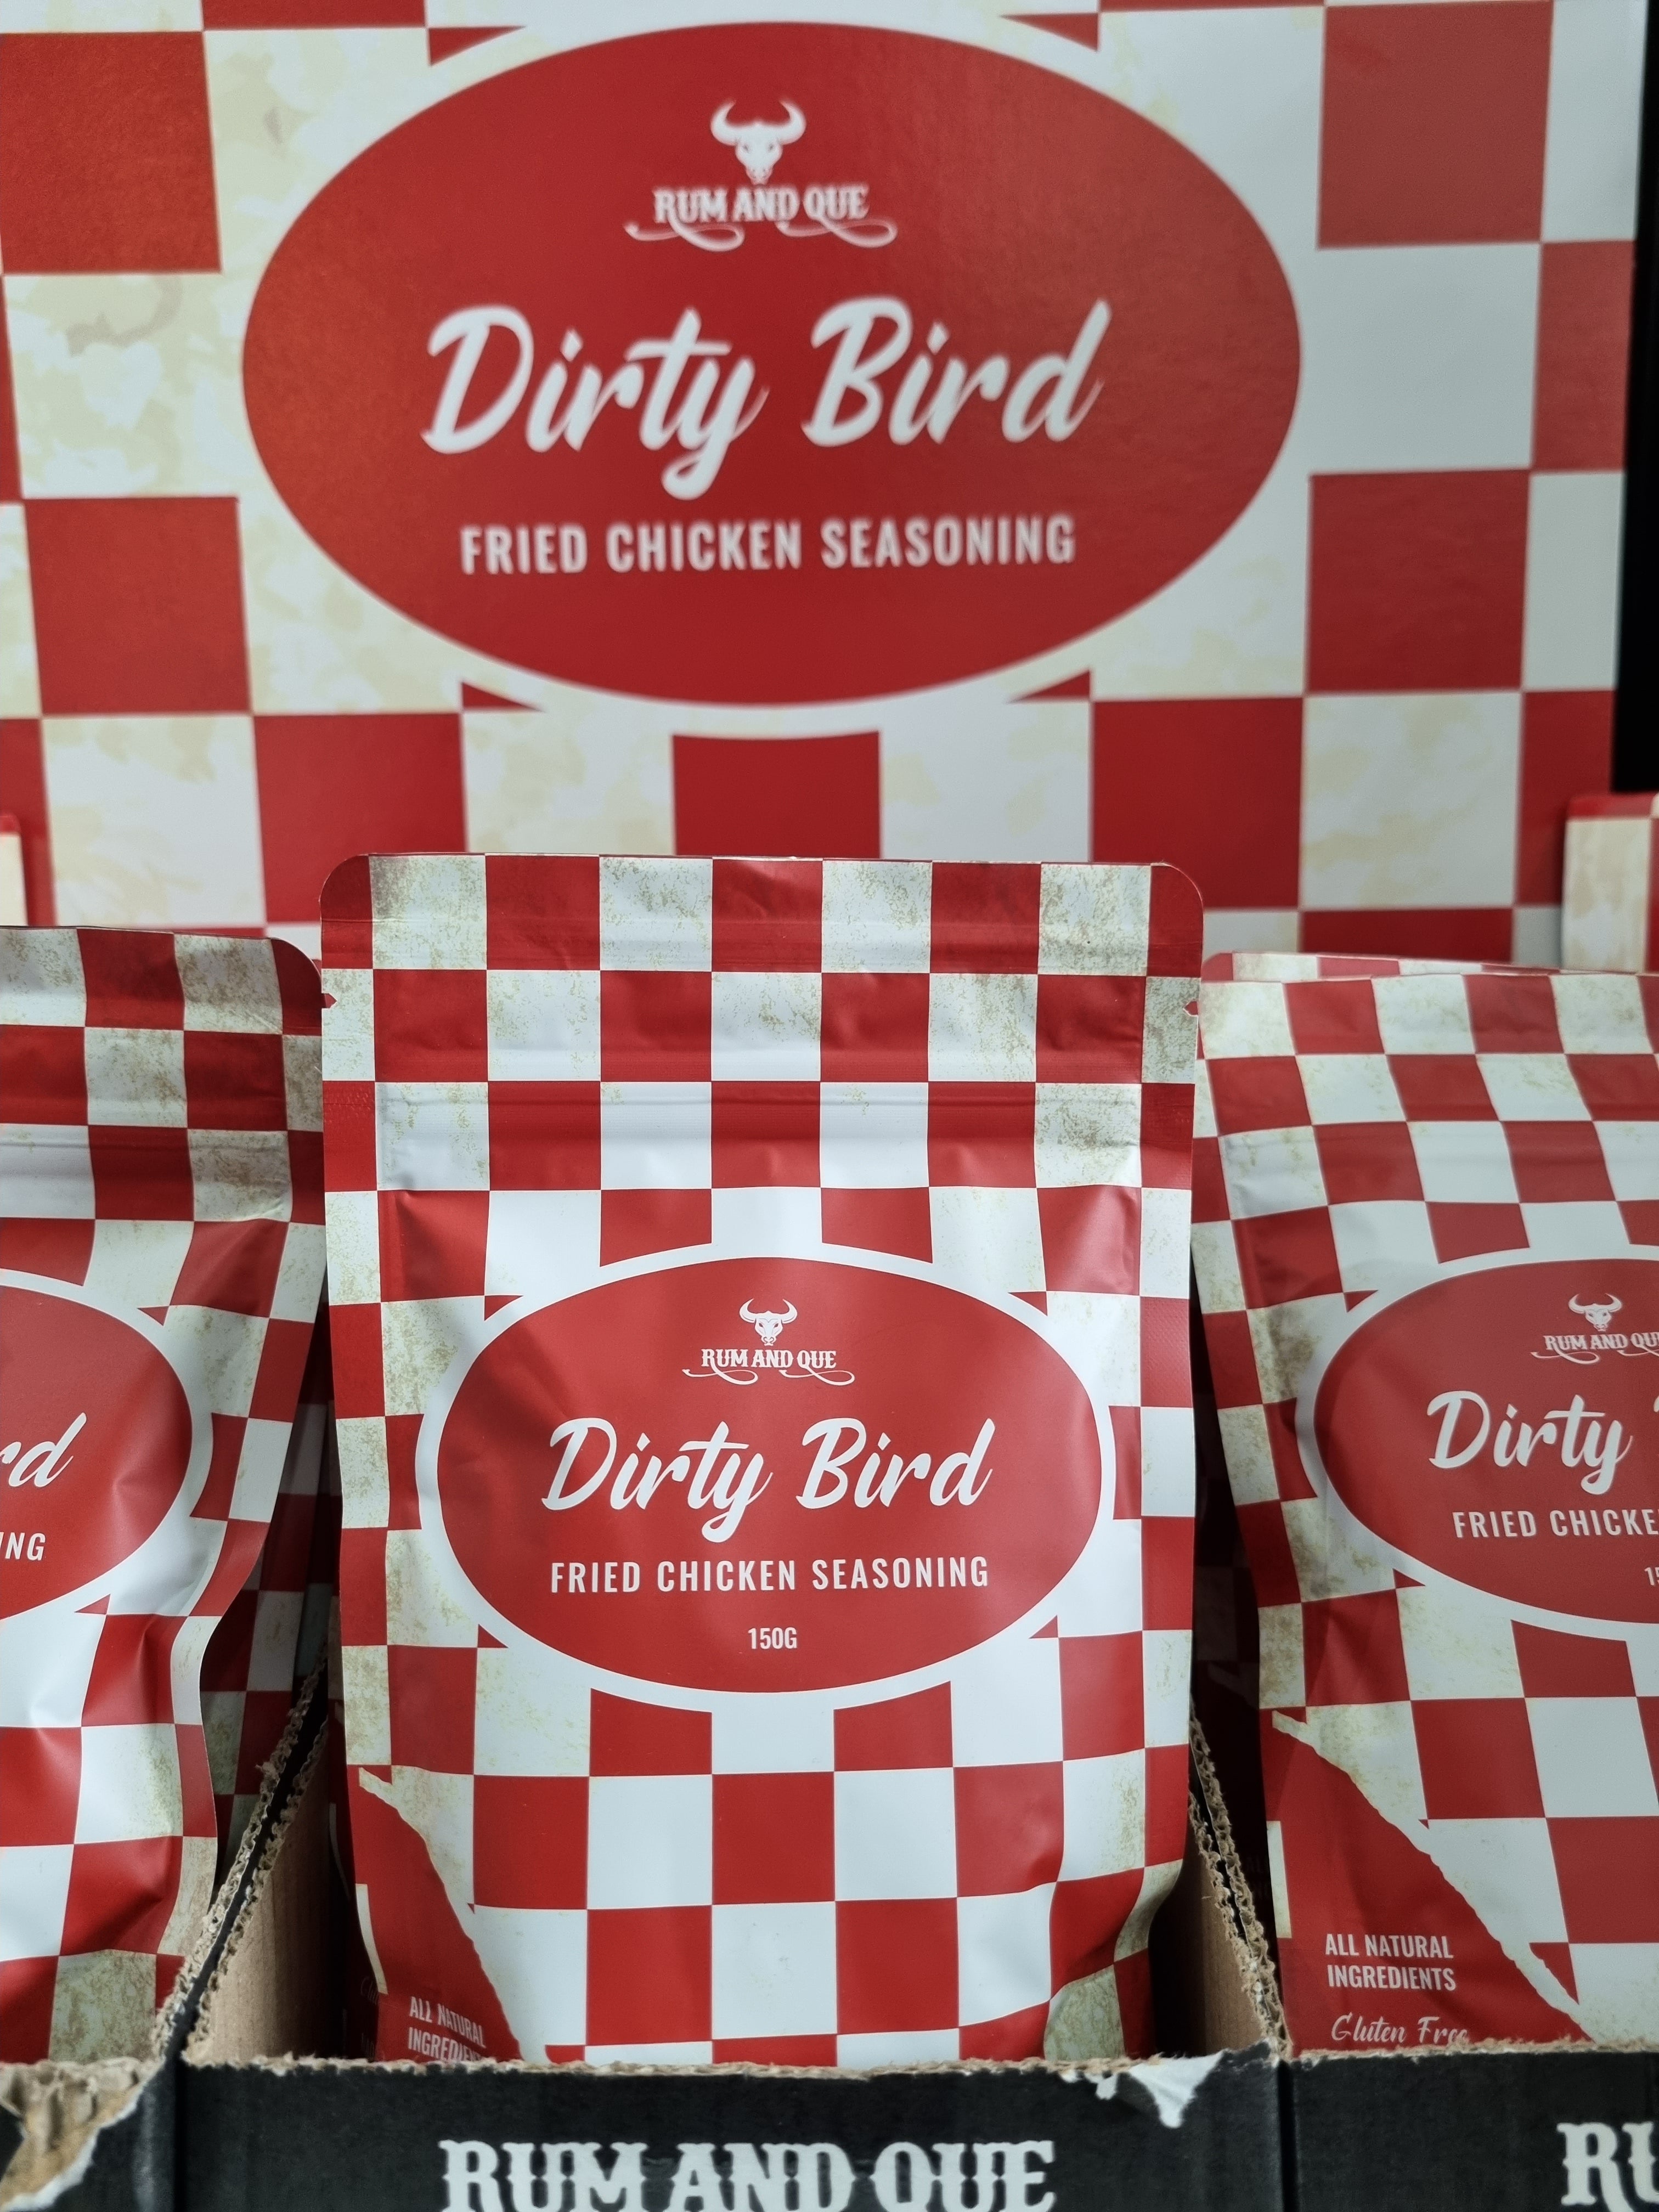 Dirty Bird Fried Chicken Seasoning by Rum & Que